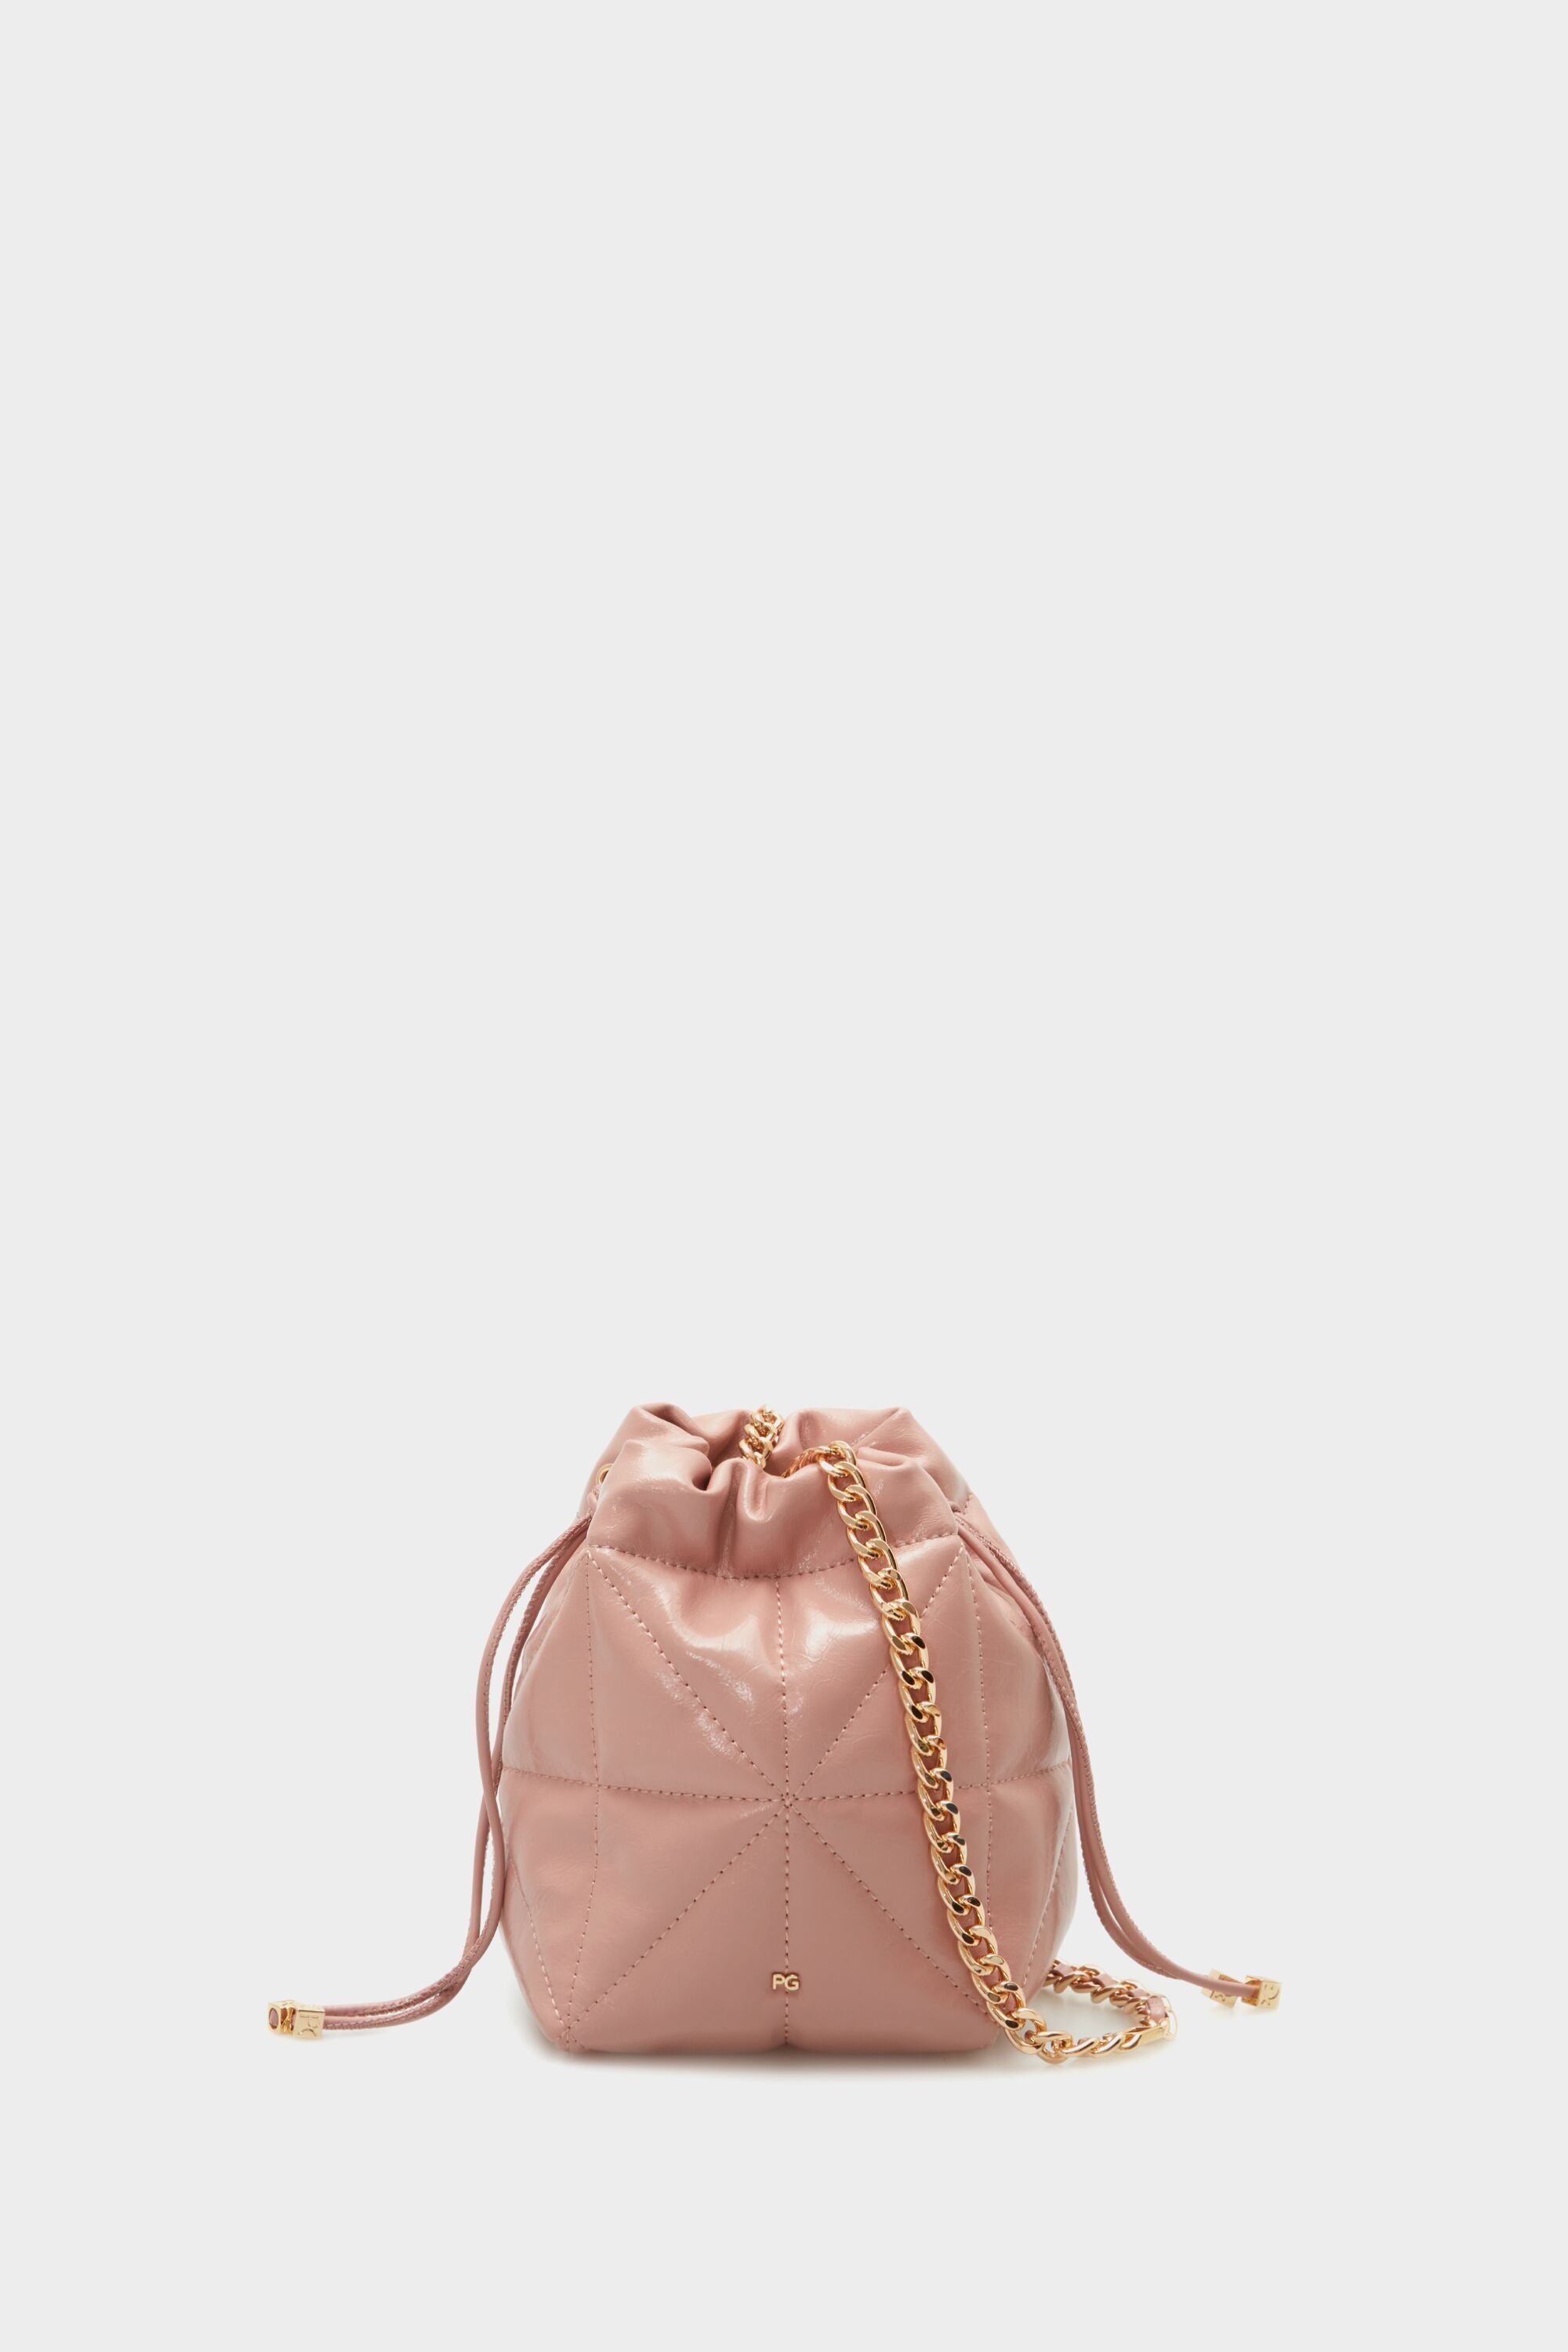 Replica Chanel Small Bucket Bag in Lambskin & Resin AS3793 Black (Limi